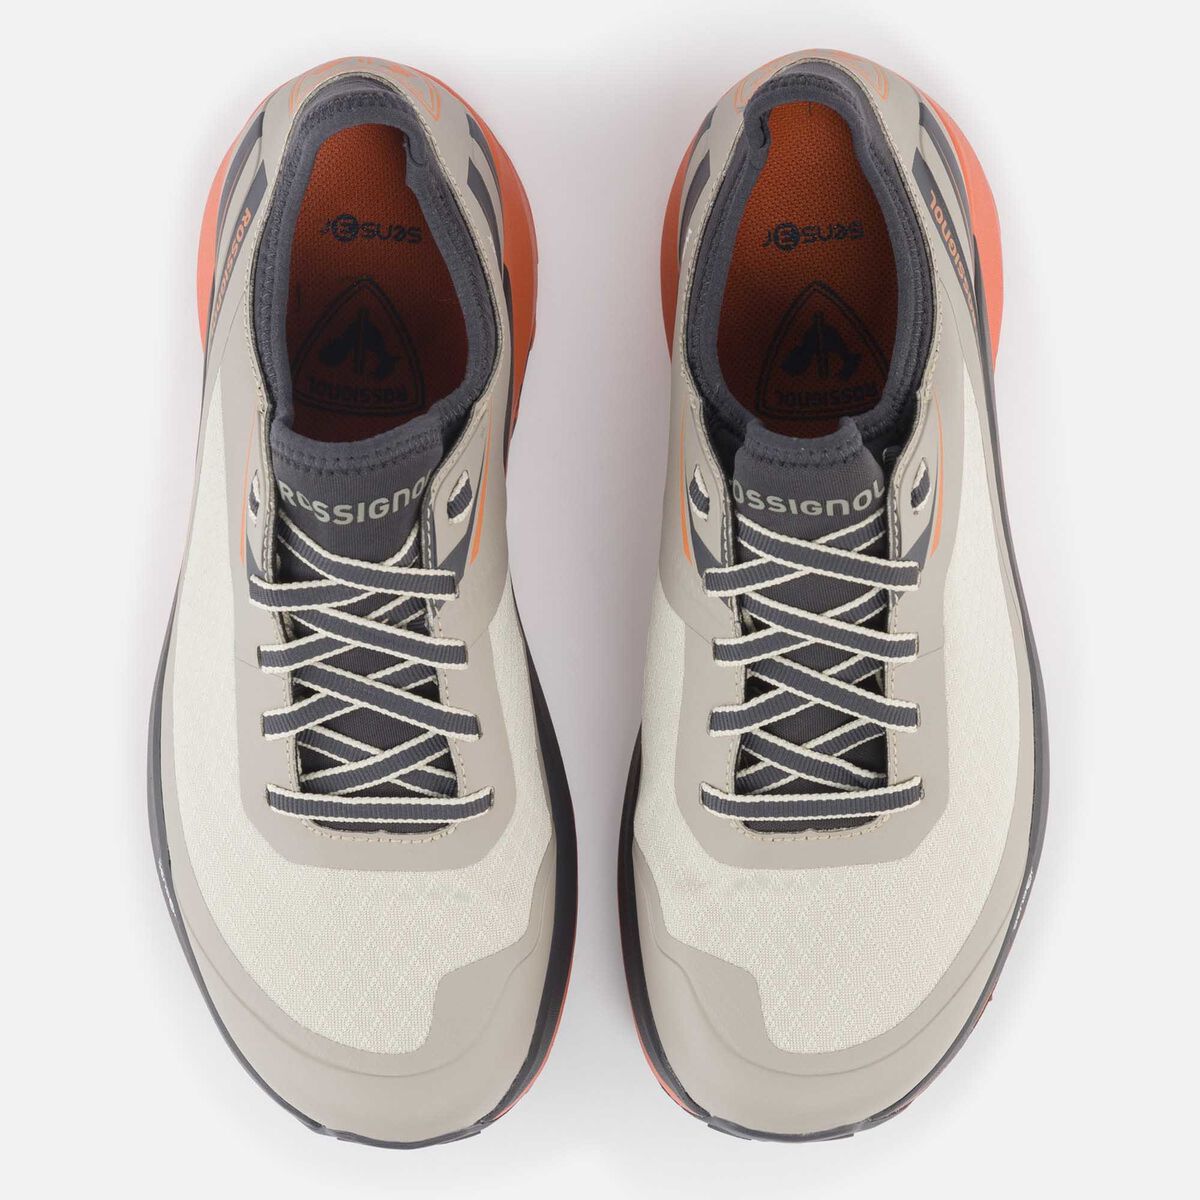 Rossignol Chaussures Active outdoor imperméables kaki femme grey